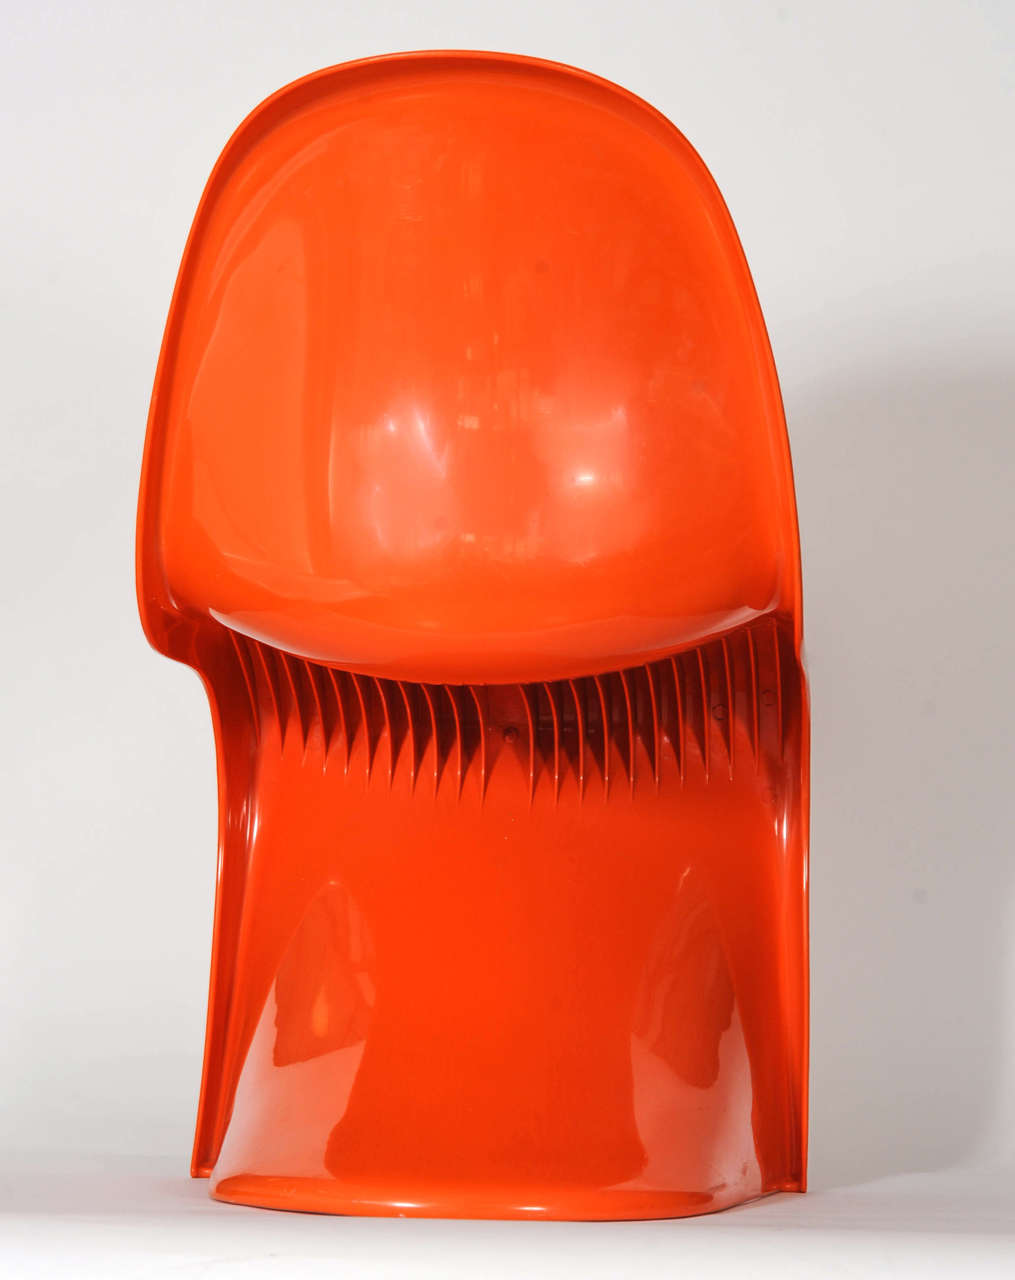 American Pair of Orange Original Panton S Chairs by Verner Panton for Herman Miller